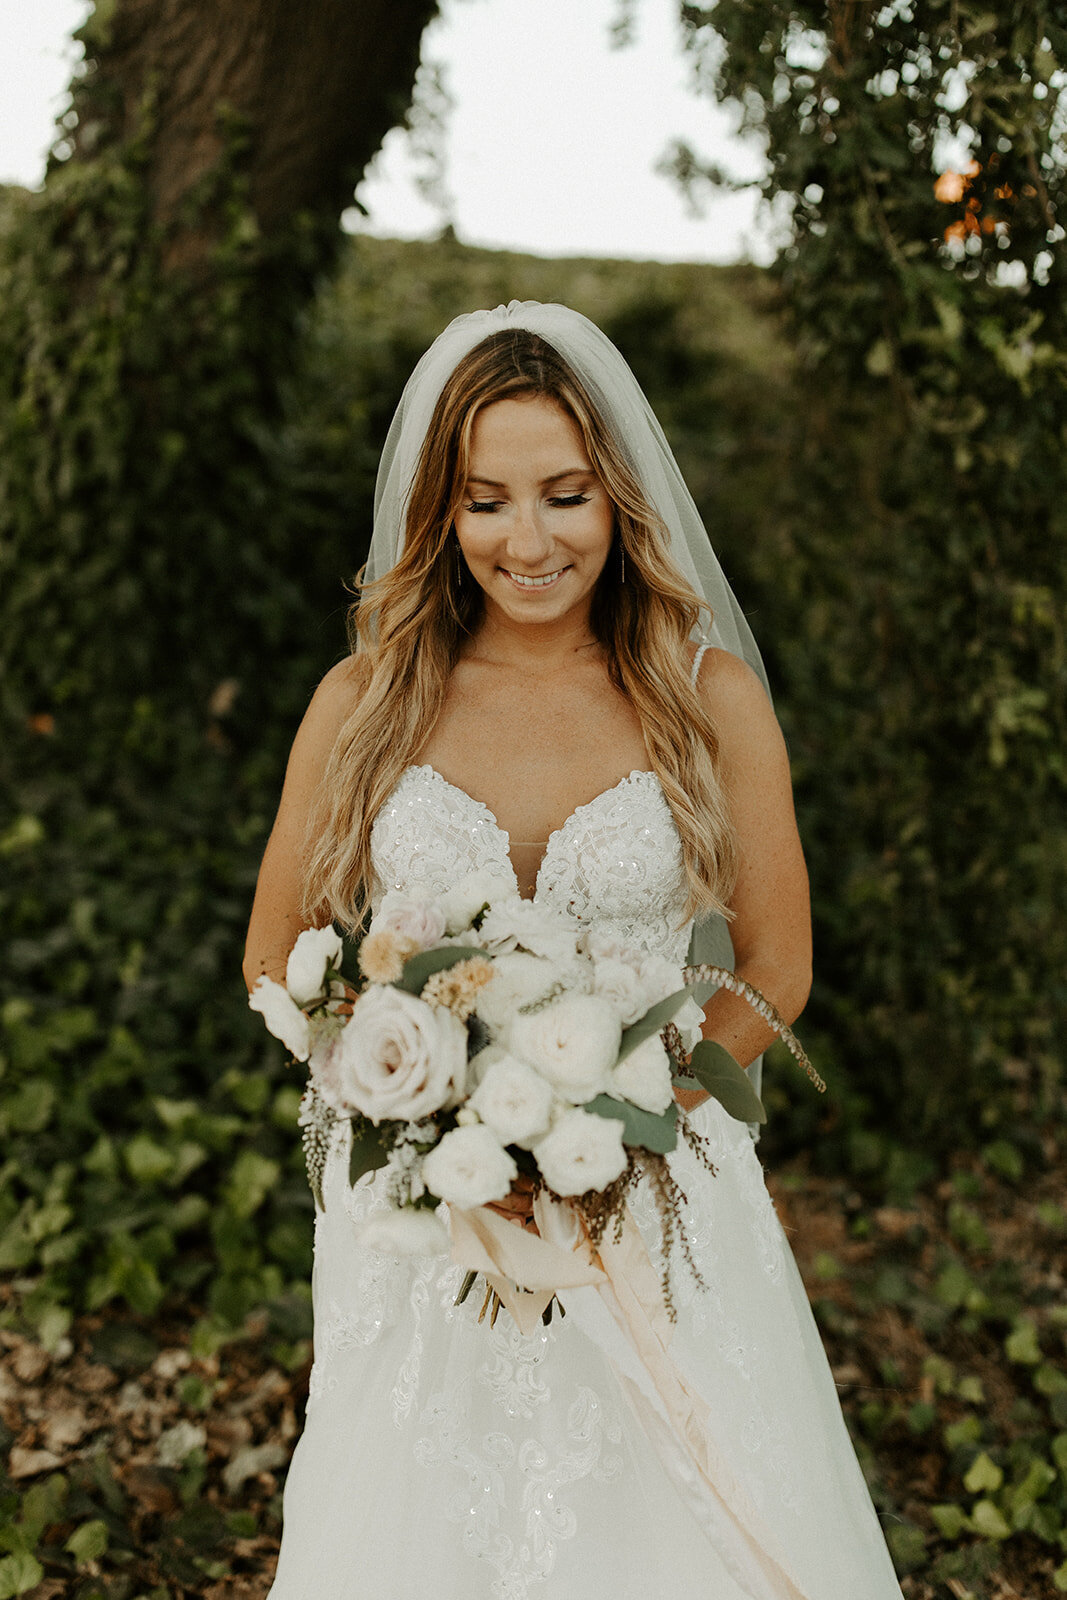 bride holding beautiful bouquet